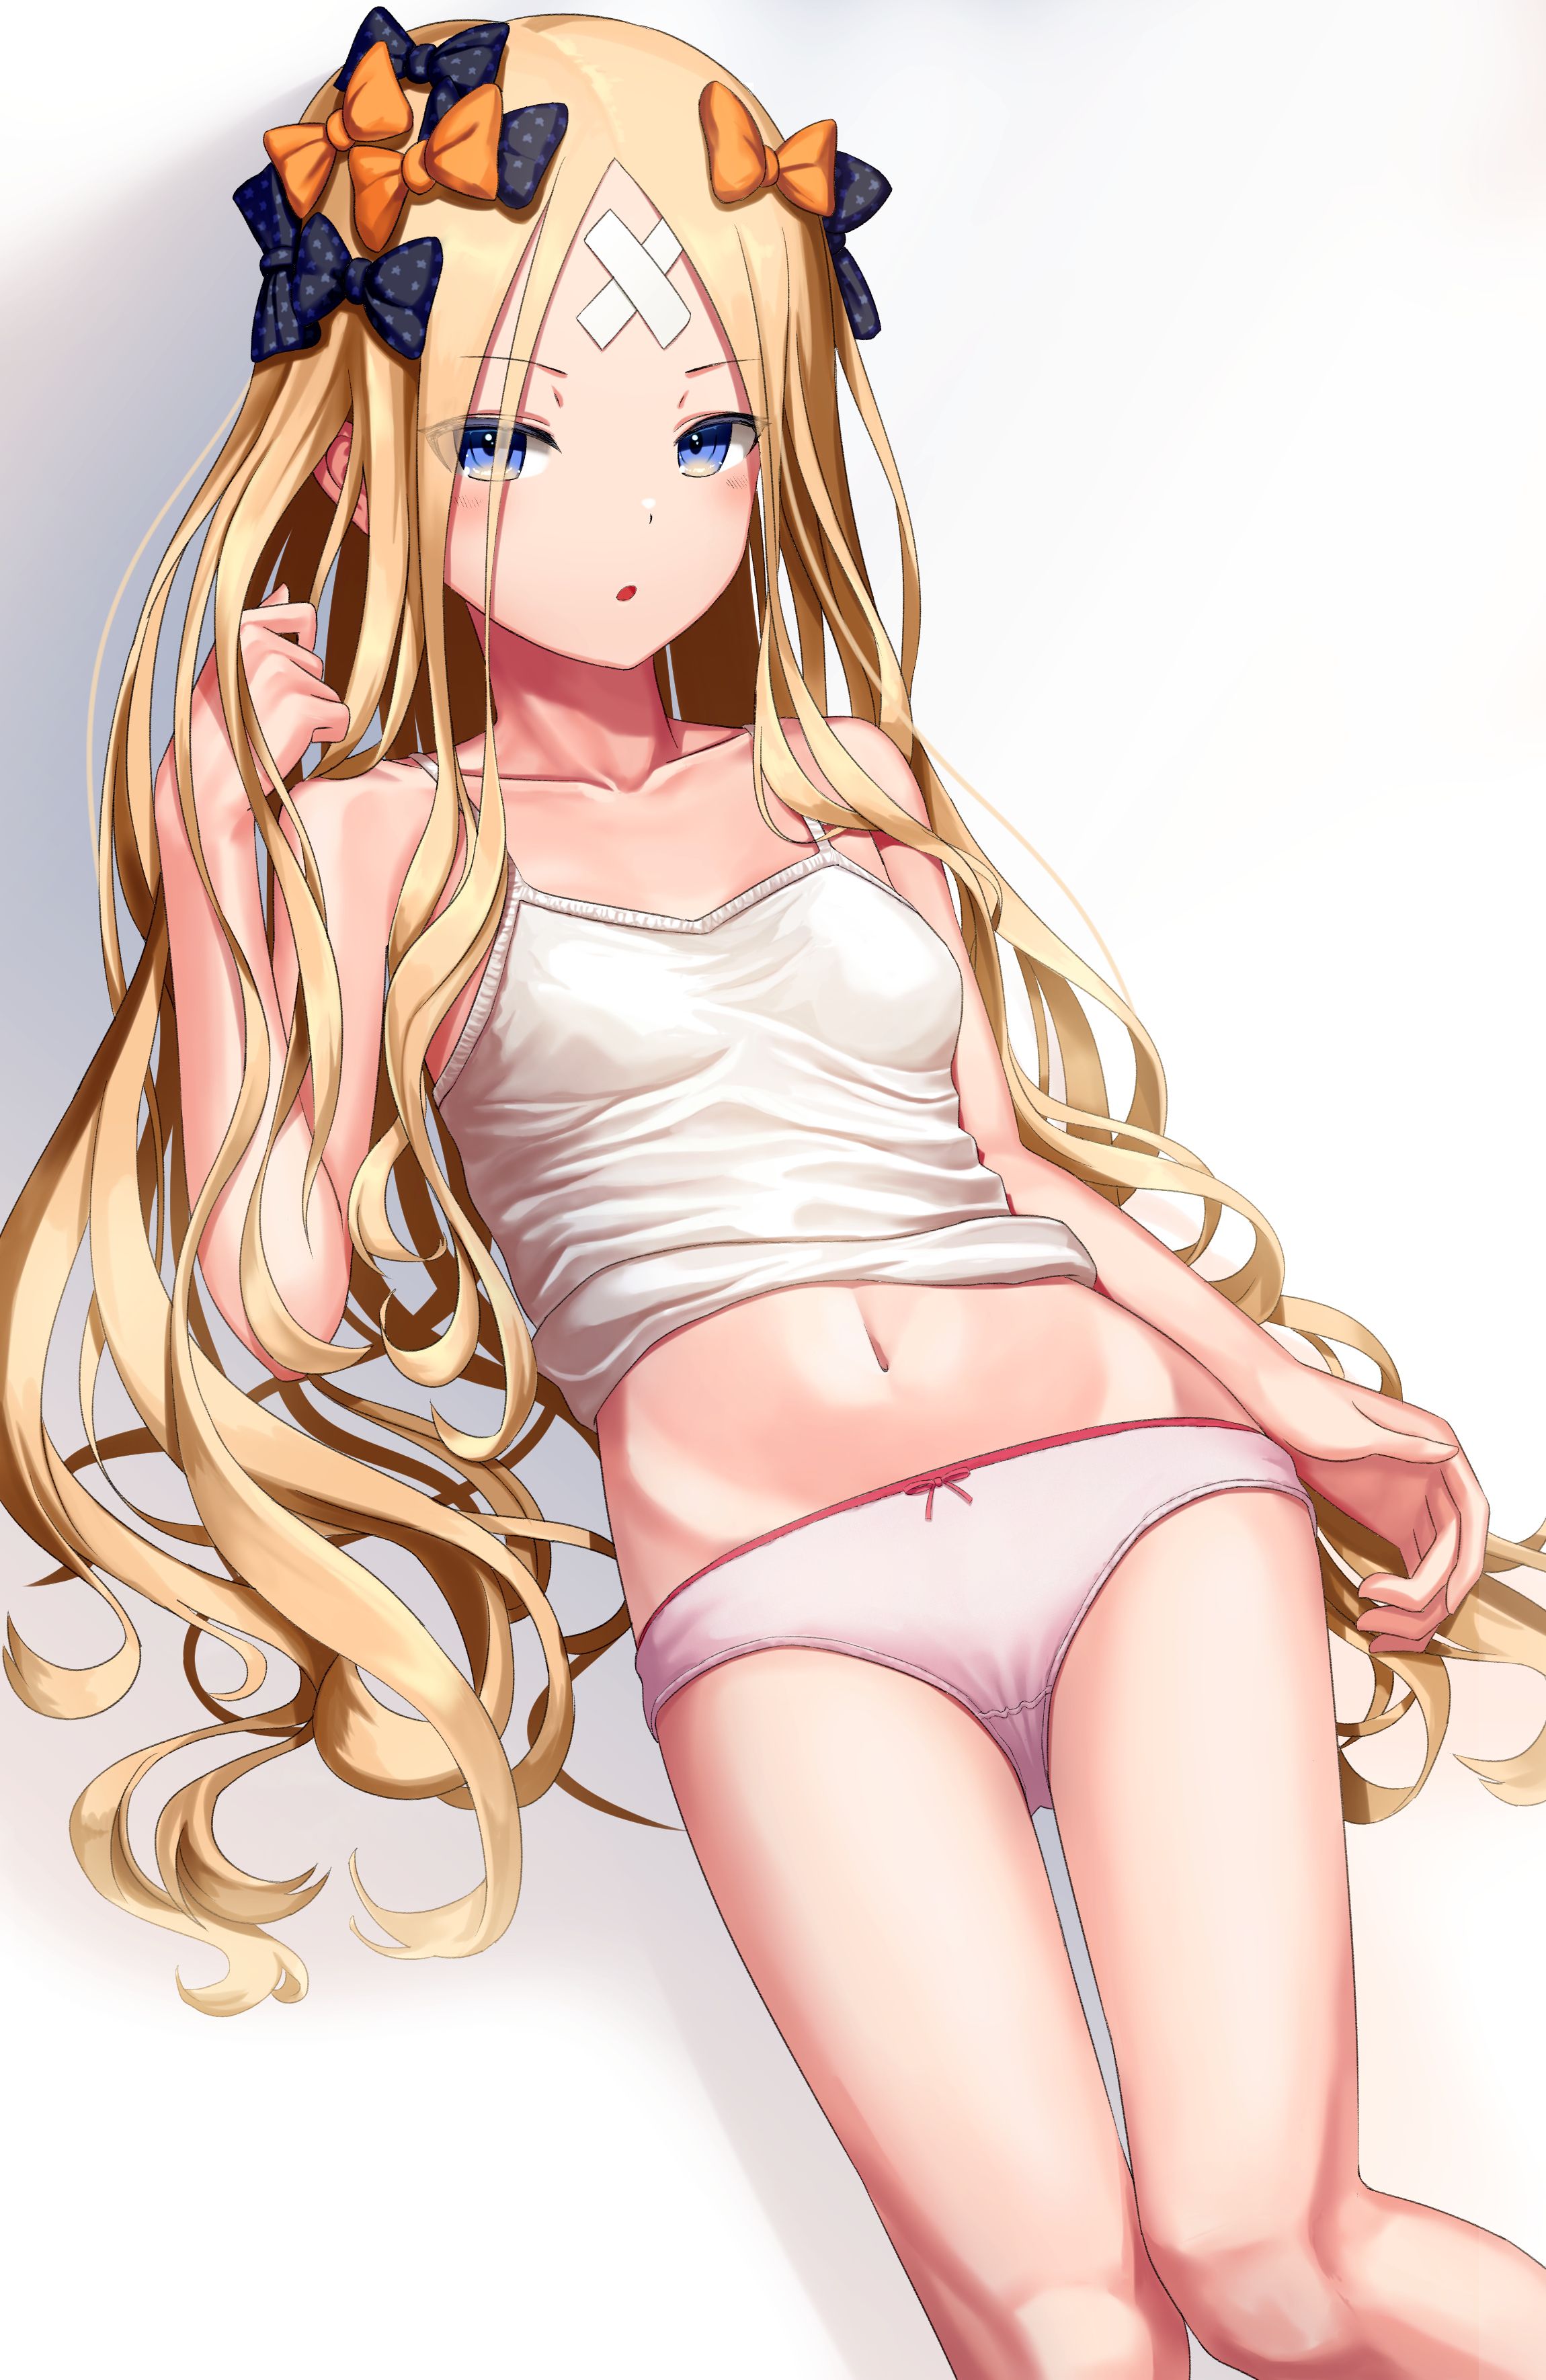 Erotic anime summary erotic images of beautiful girls wearing erotic underwear [50 pieces] 33